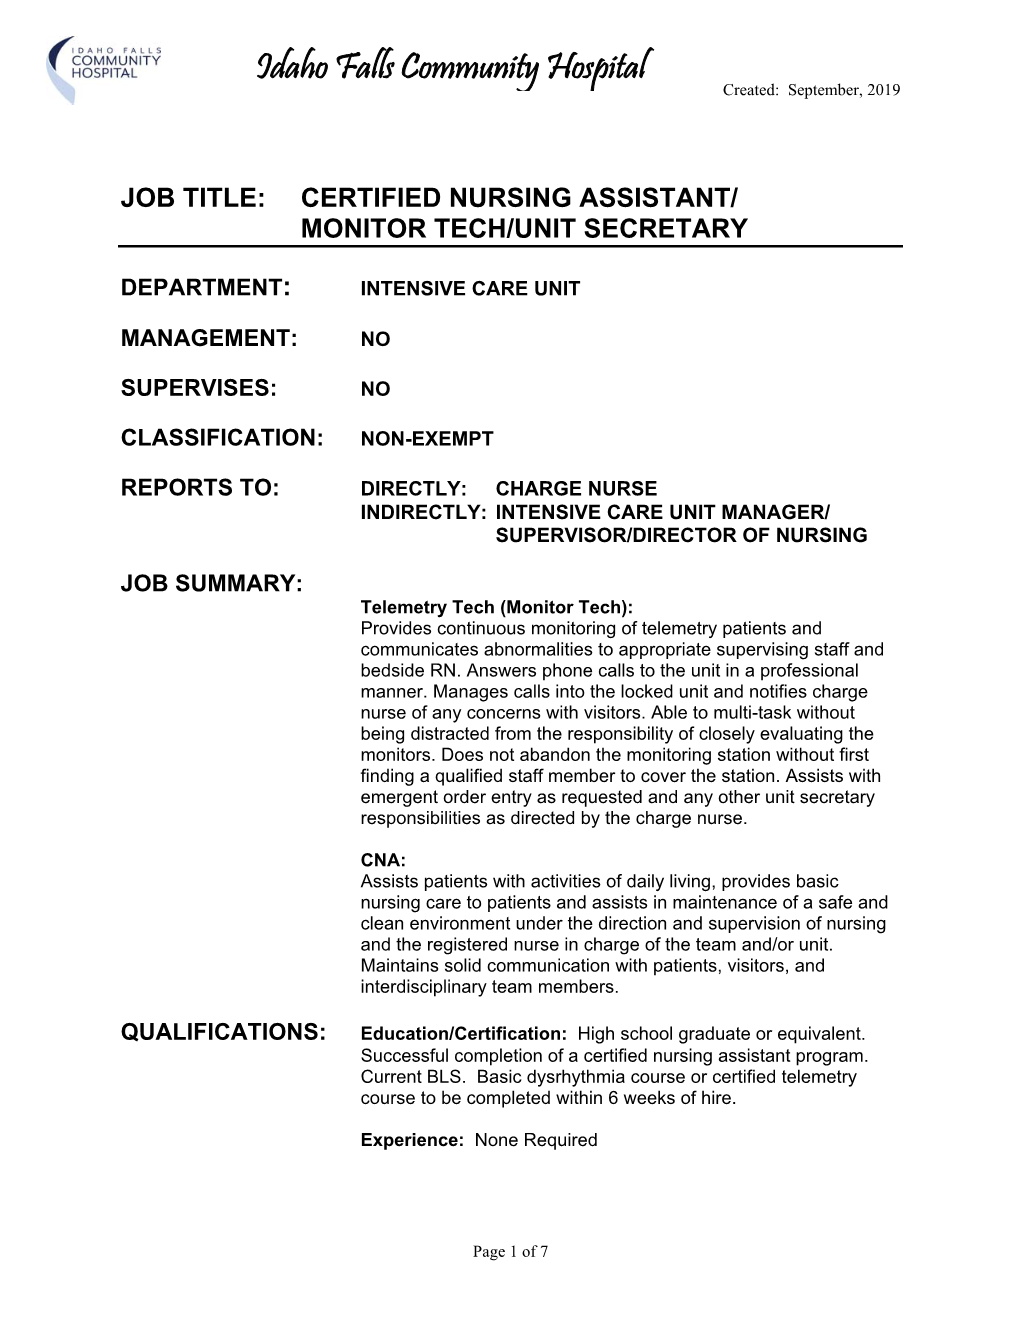 Certified Nursing Assistant/ Monitor Tech/Unit Secretary